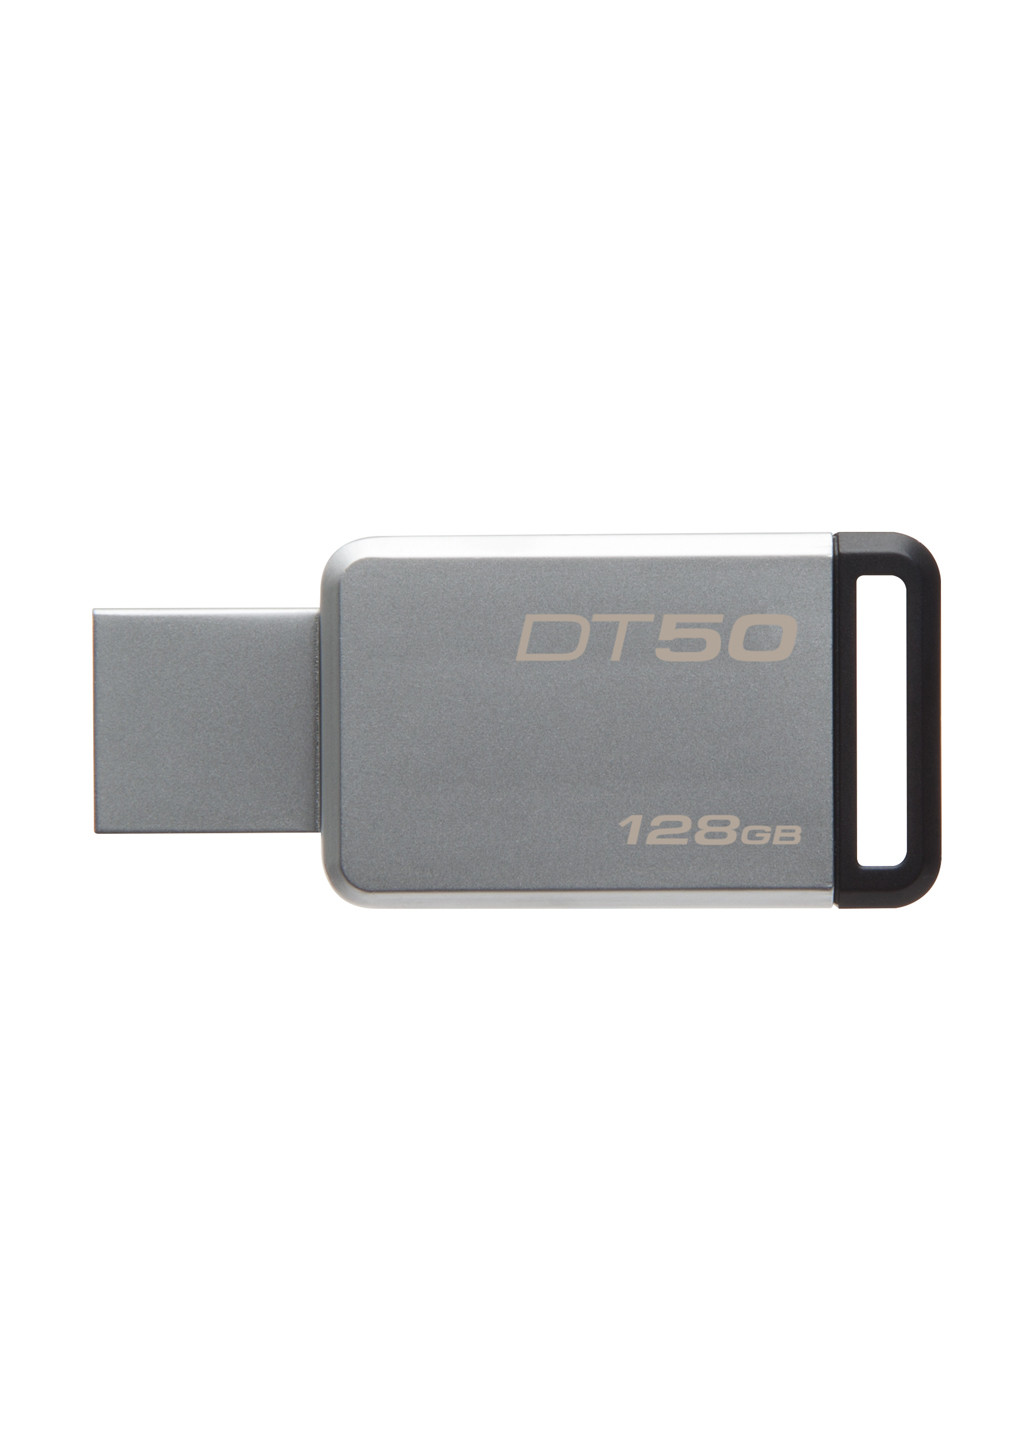 Флеш память USB DataTraveler 50 128GB Black (DT50/128GB) Kingston флеш память usb kingston datatraveler 50 128gb black (dt50/128gb) (134201739)